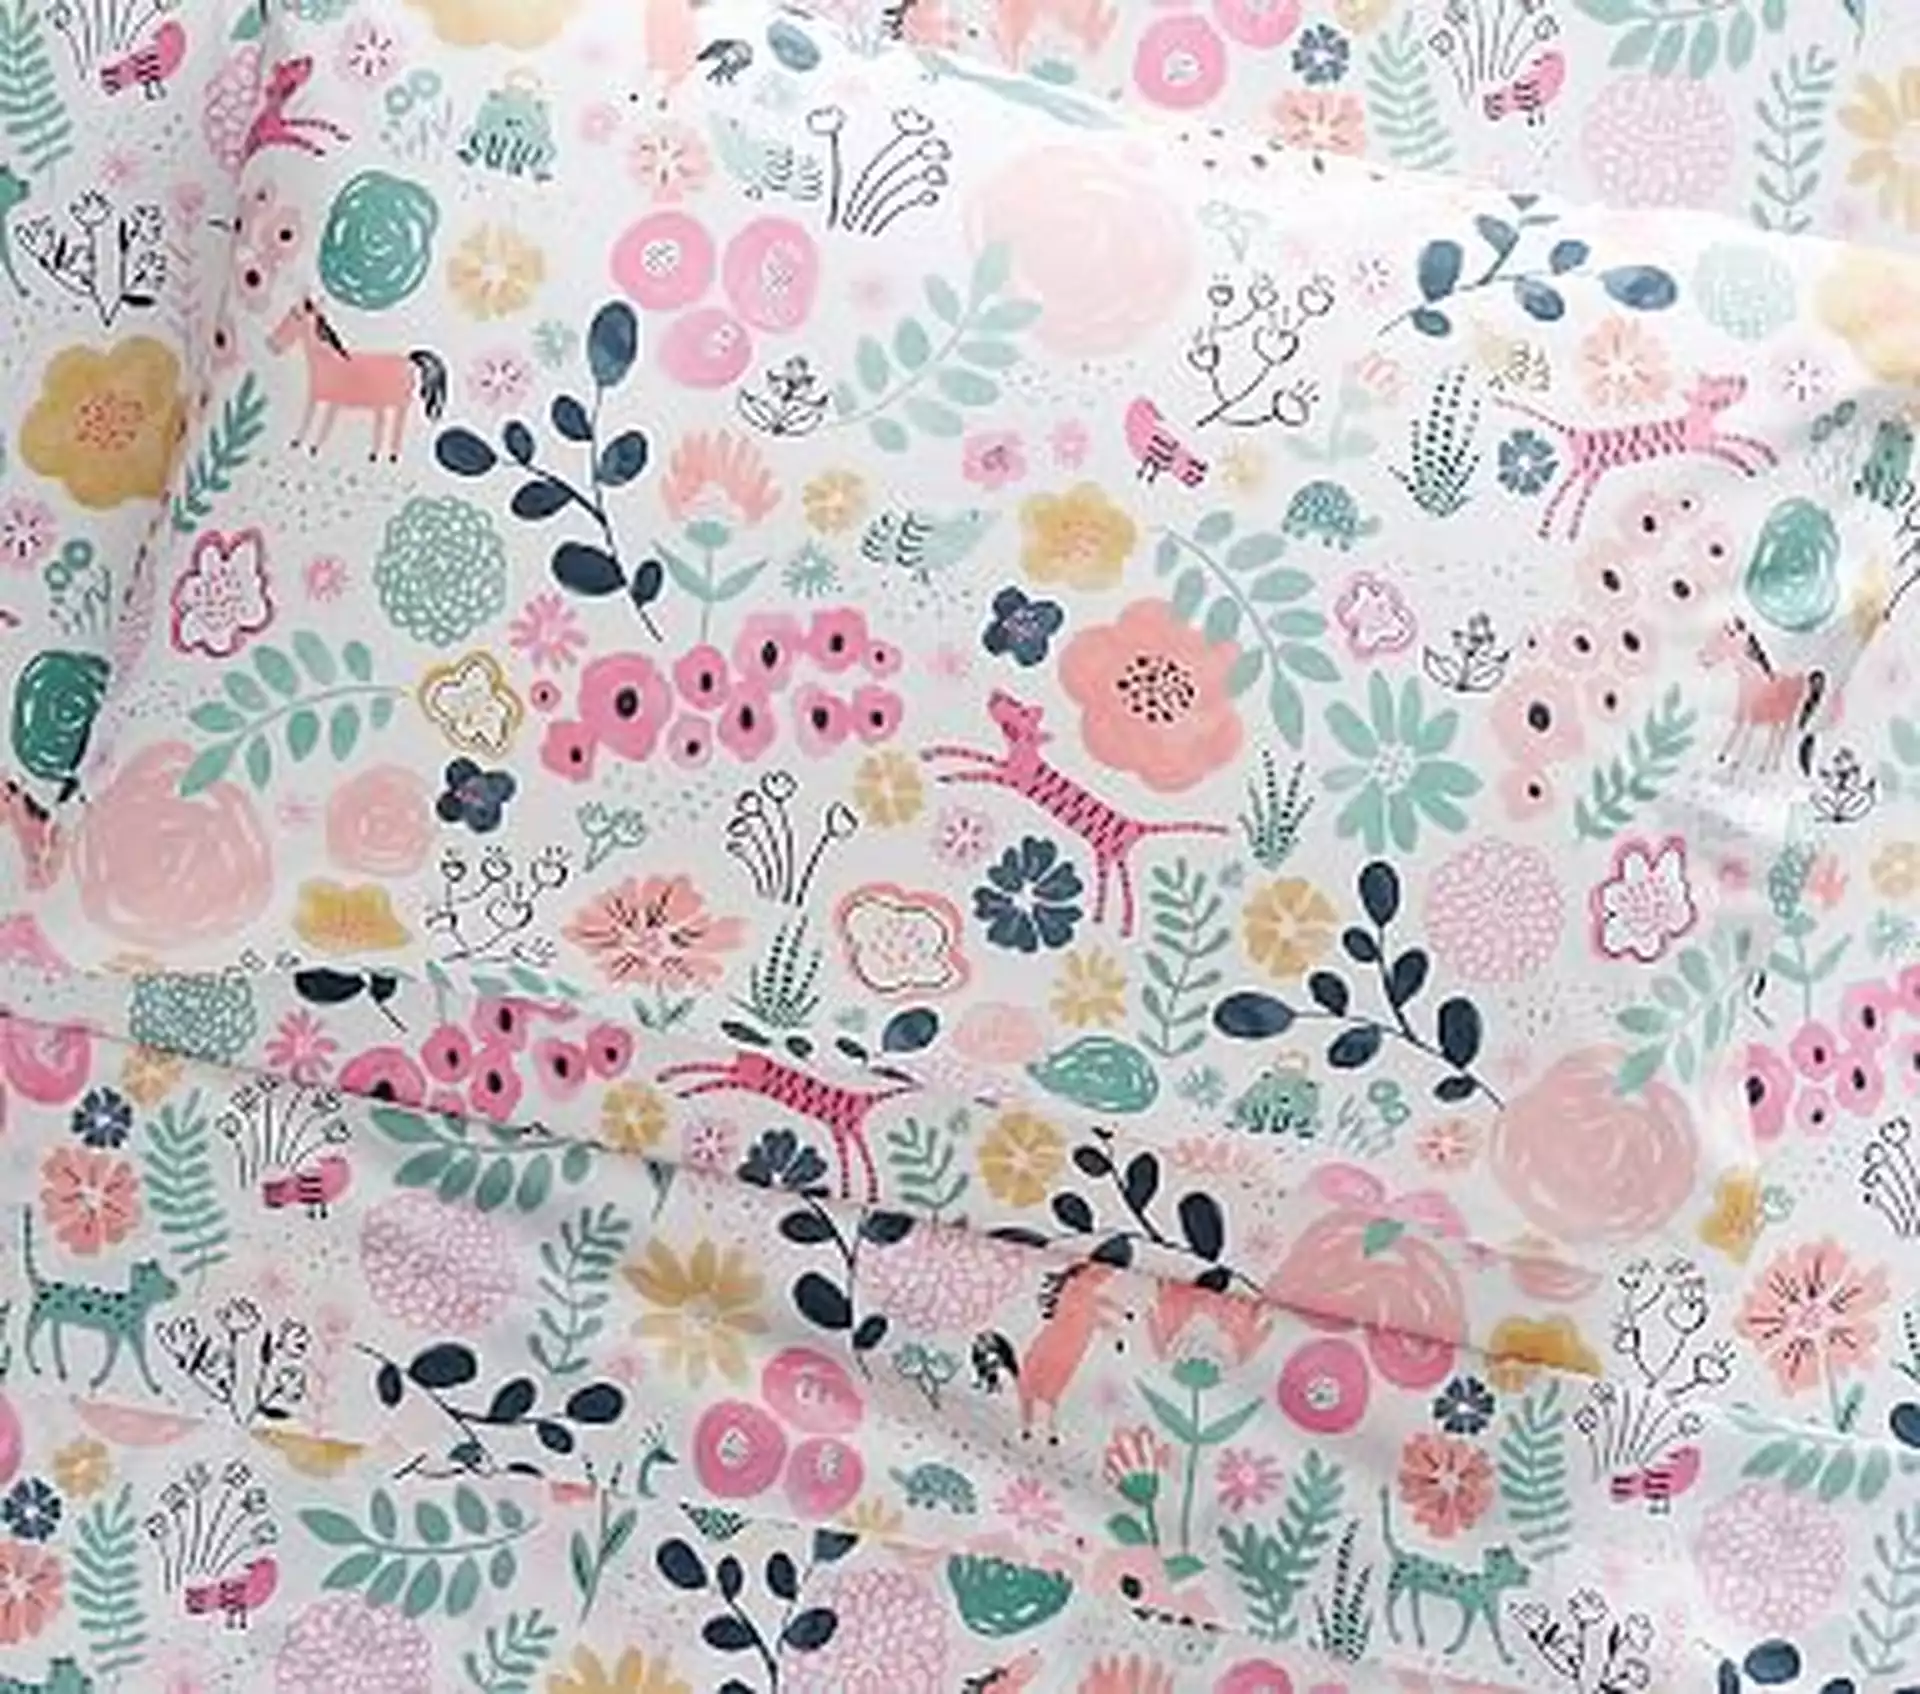 Organic Sasha's Garden Sheet Set, Pillowcase, Standard Pillow Case, Multi